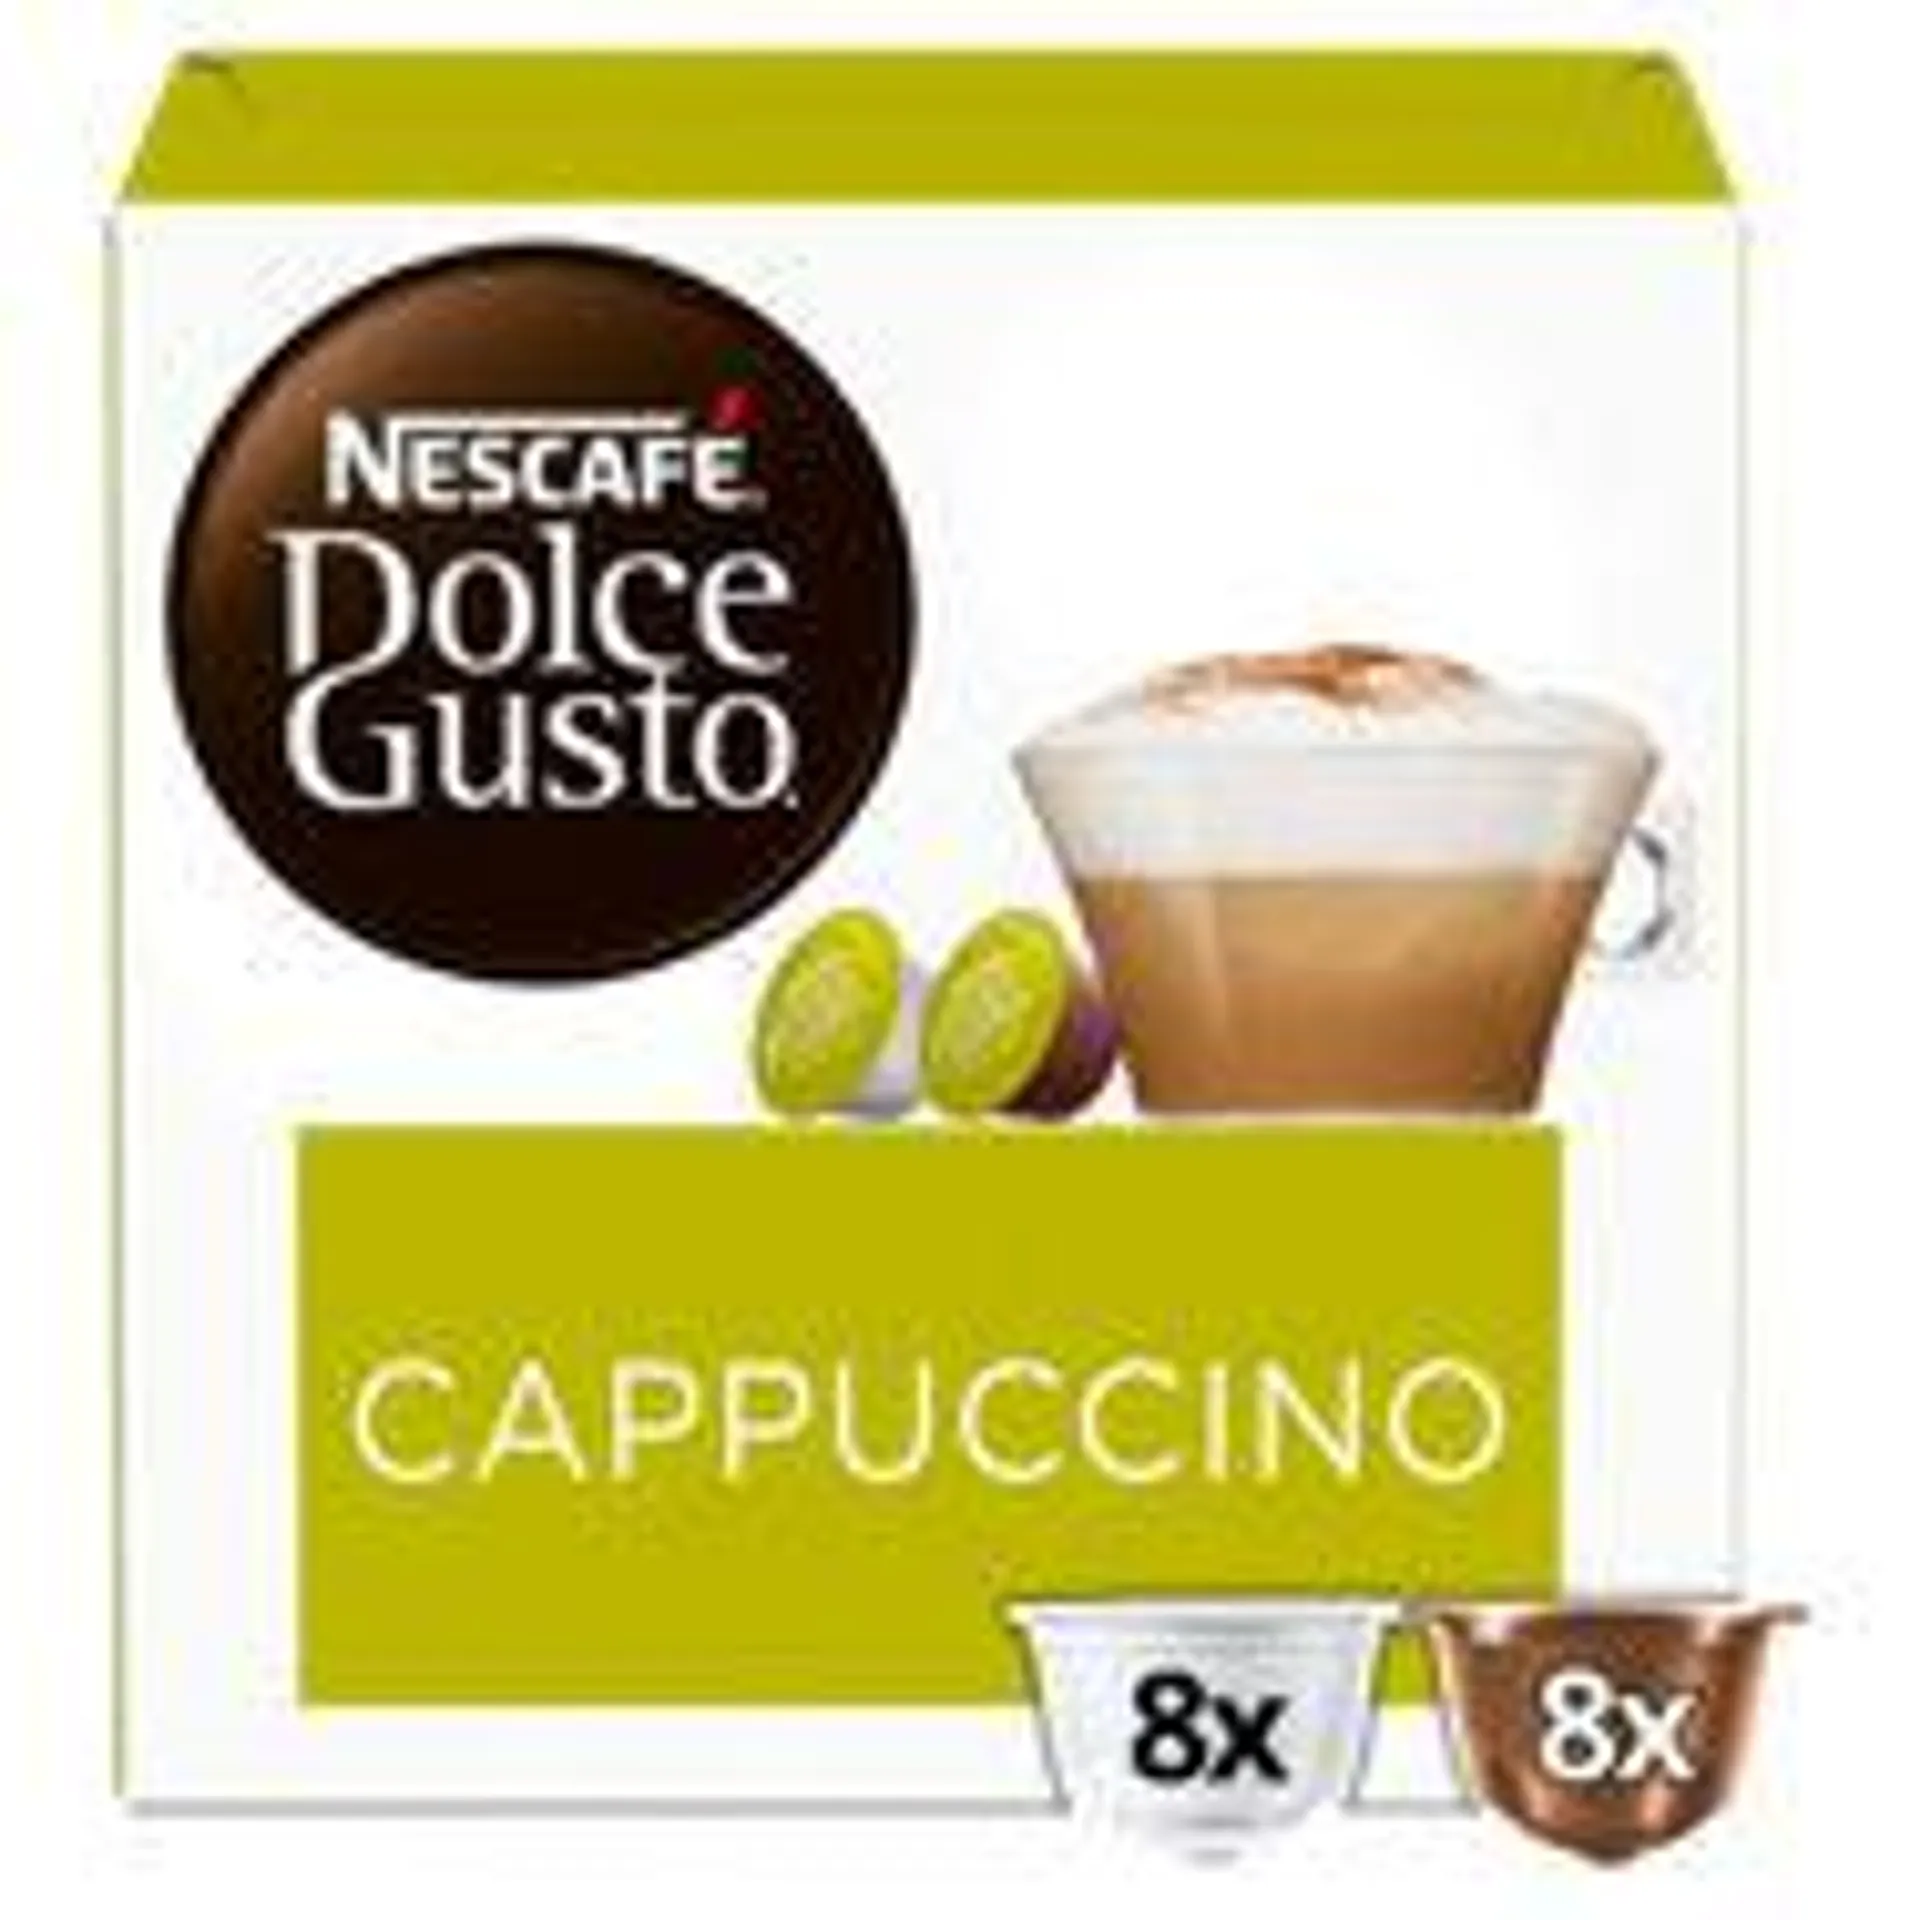 Nescafe Dolce Gusto Cappuccino Coffee Pods